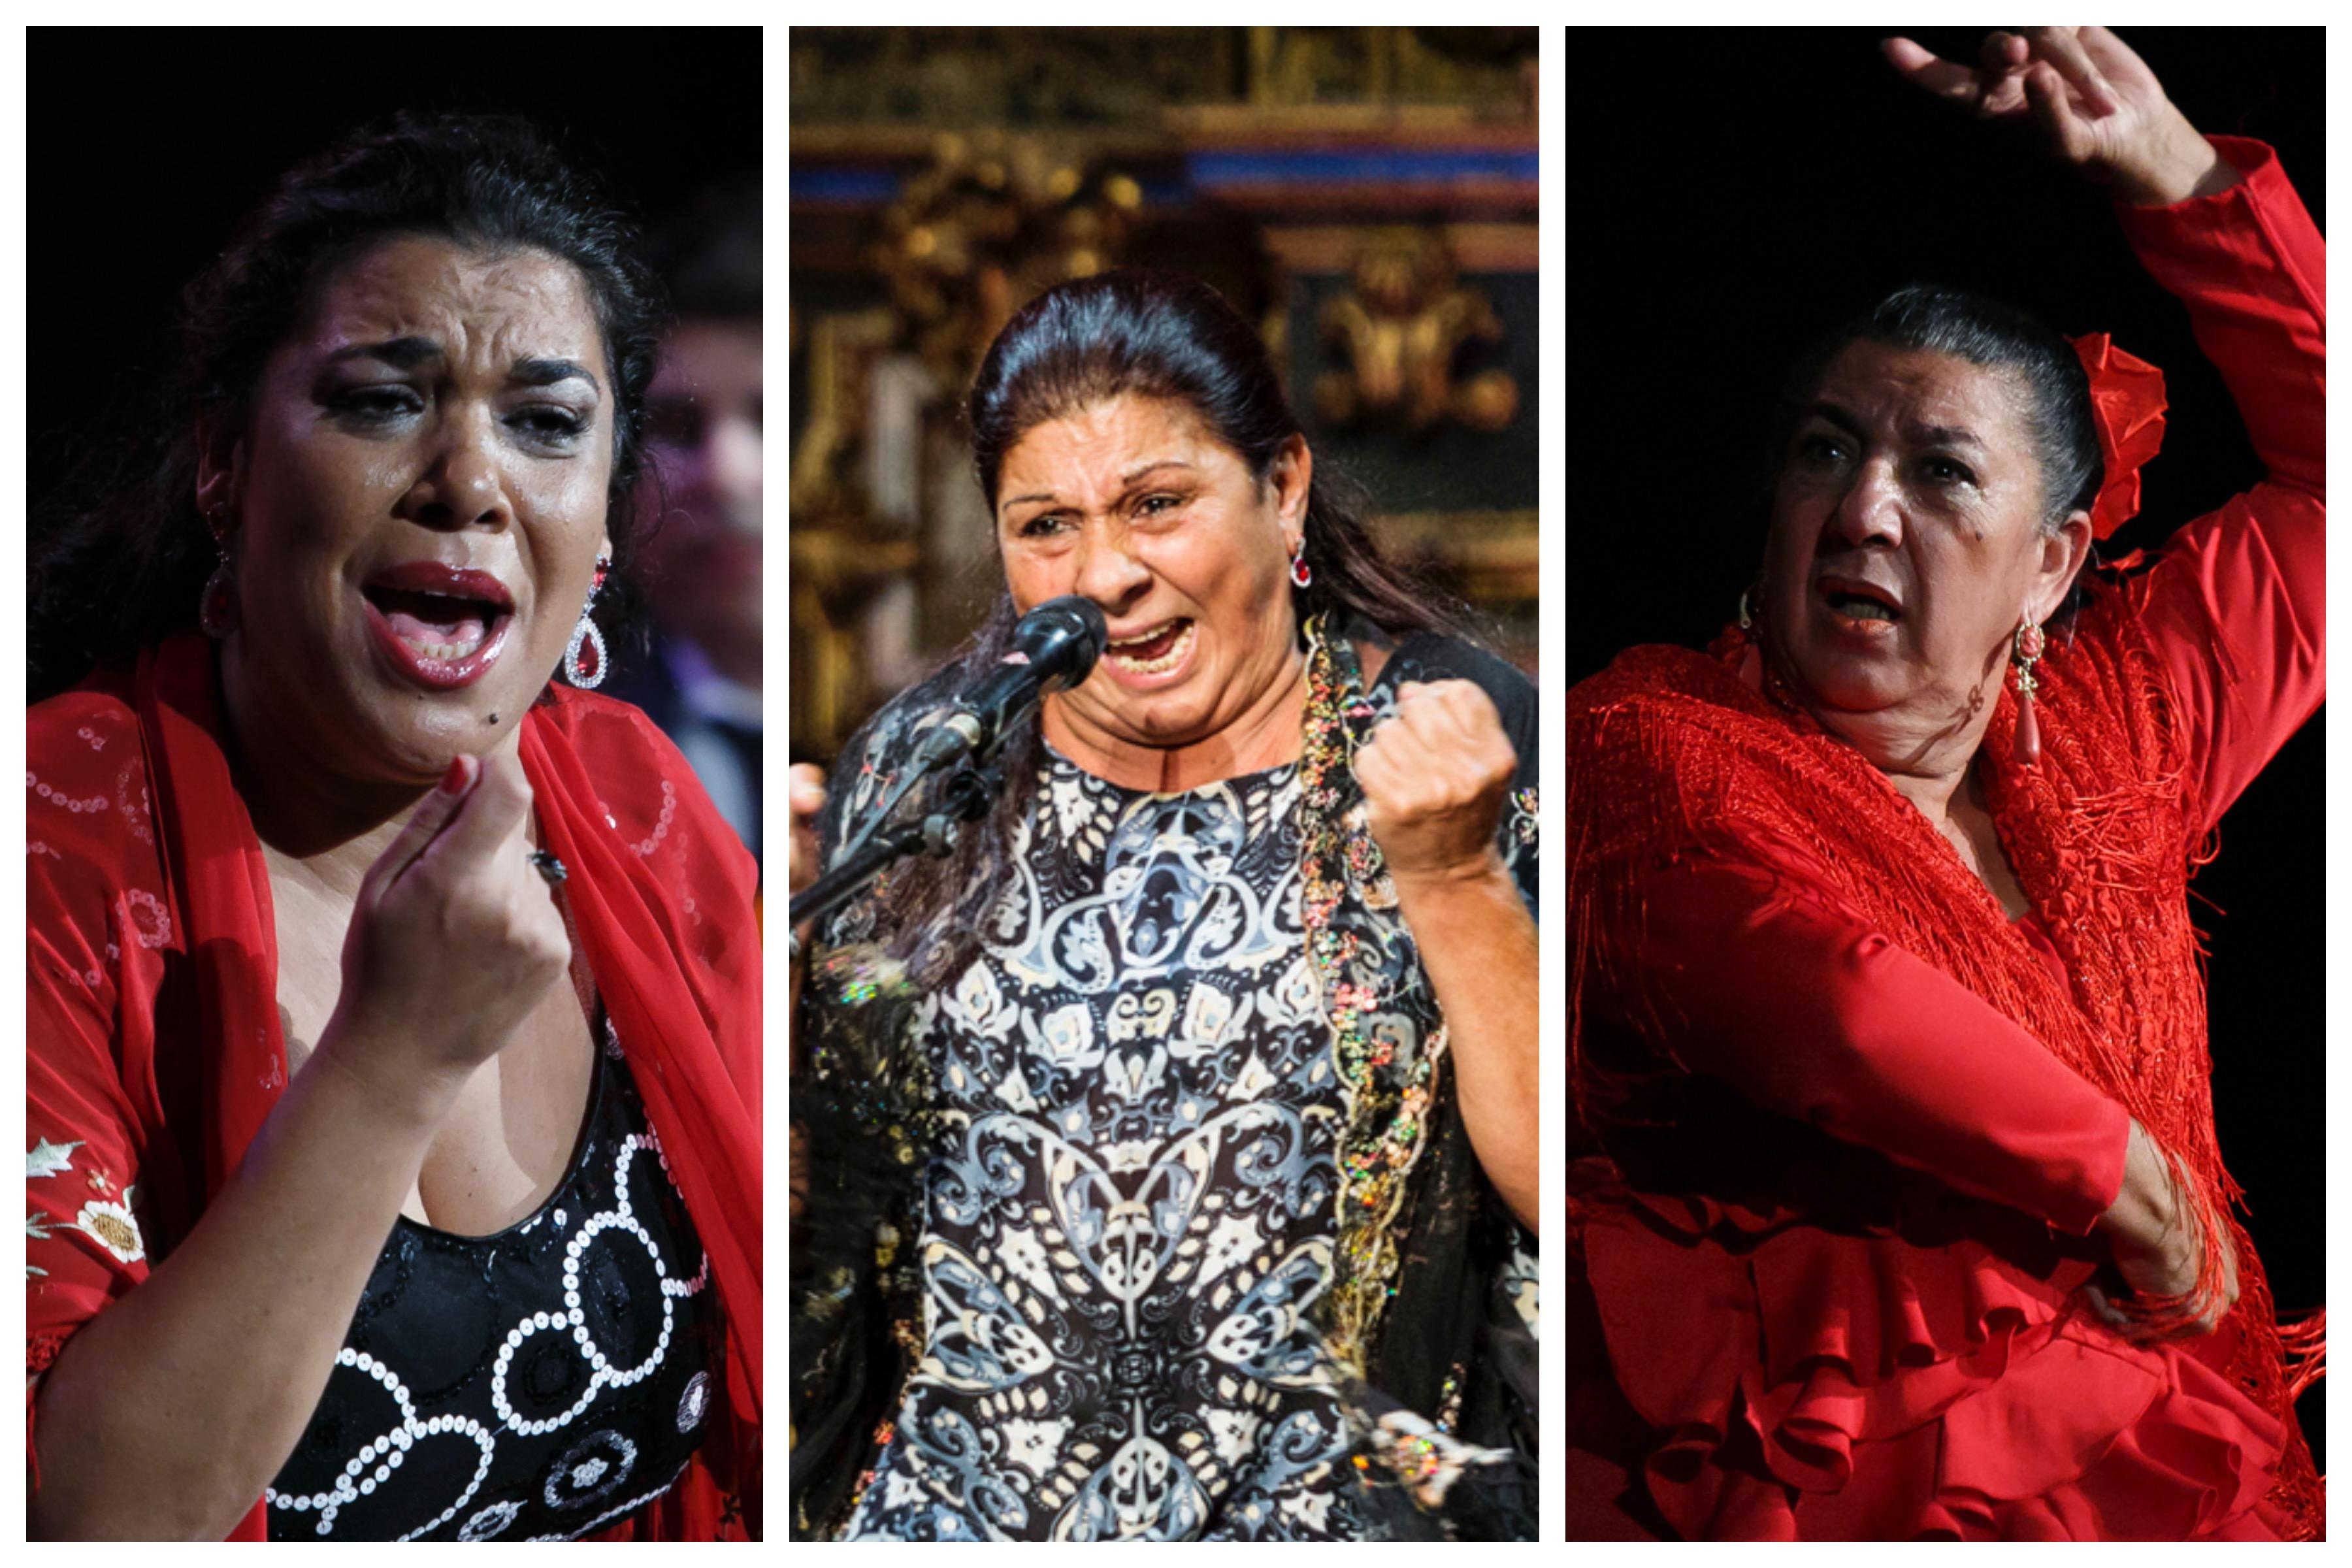 'Gratia Plena': Tres grandes voces llevan el mejor cante jerezano a la Bienal de Flamenco de Sevilla